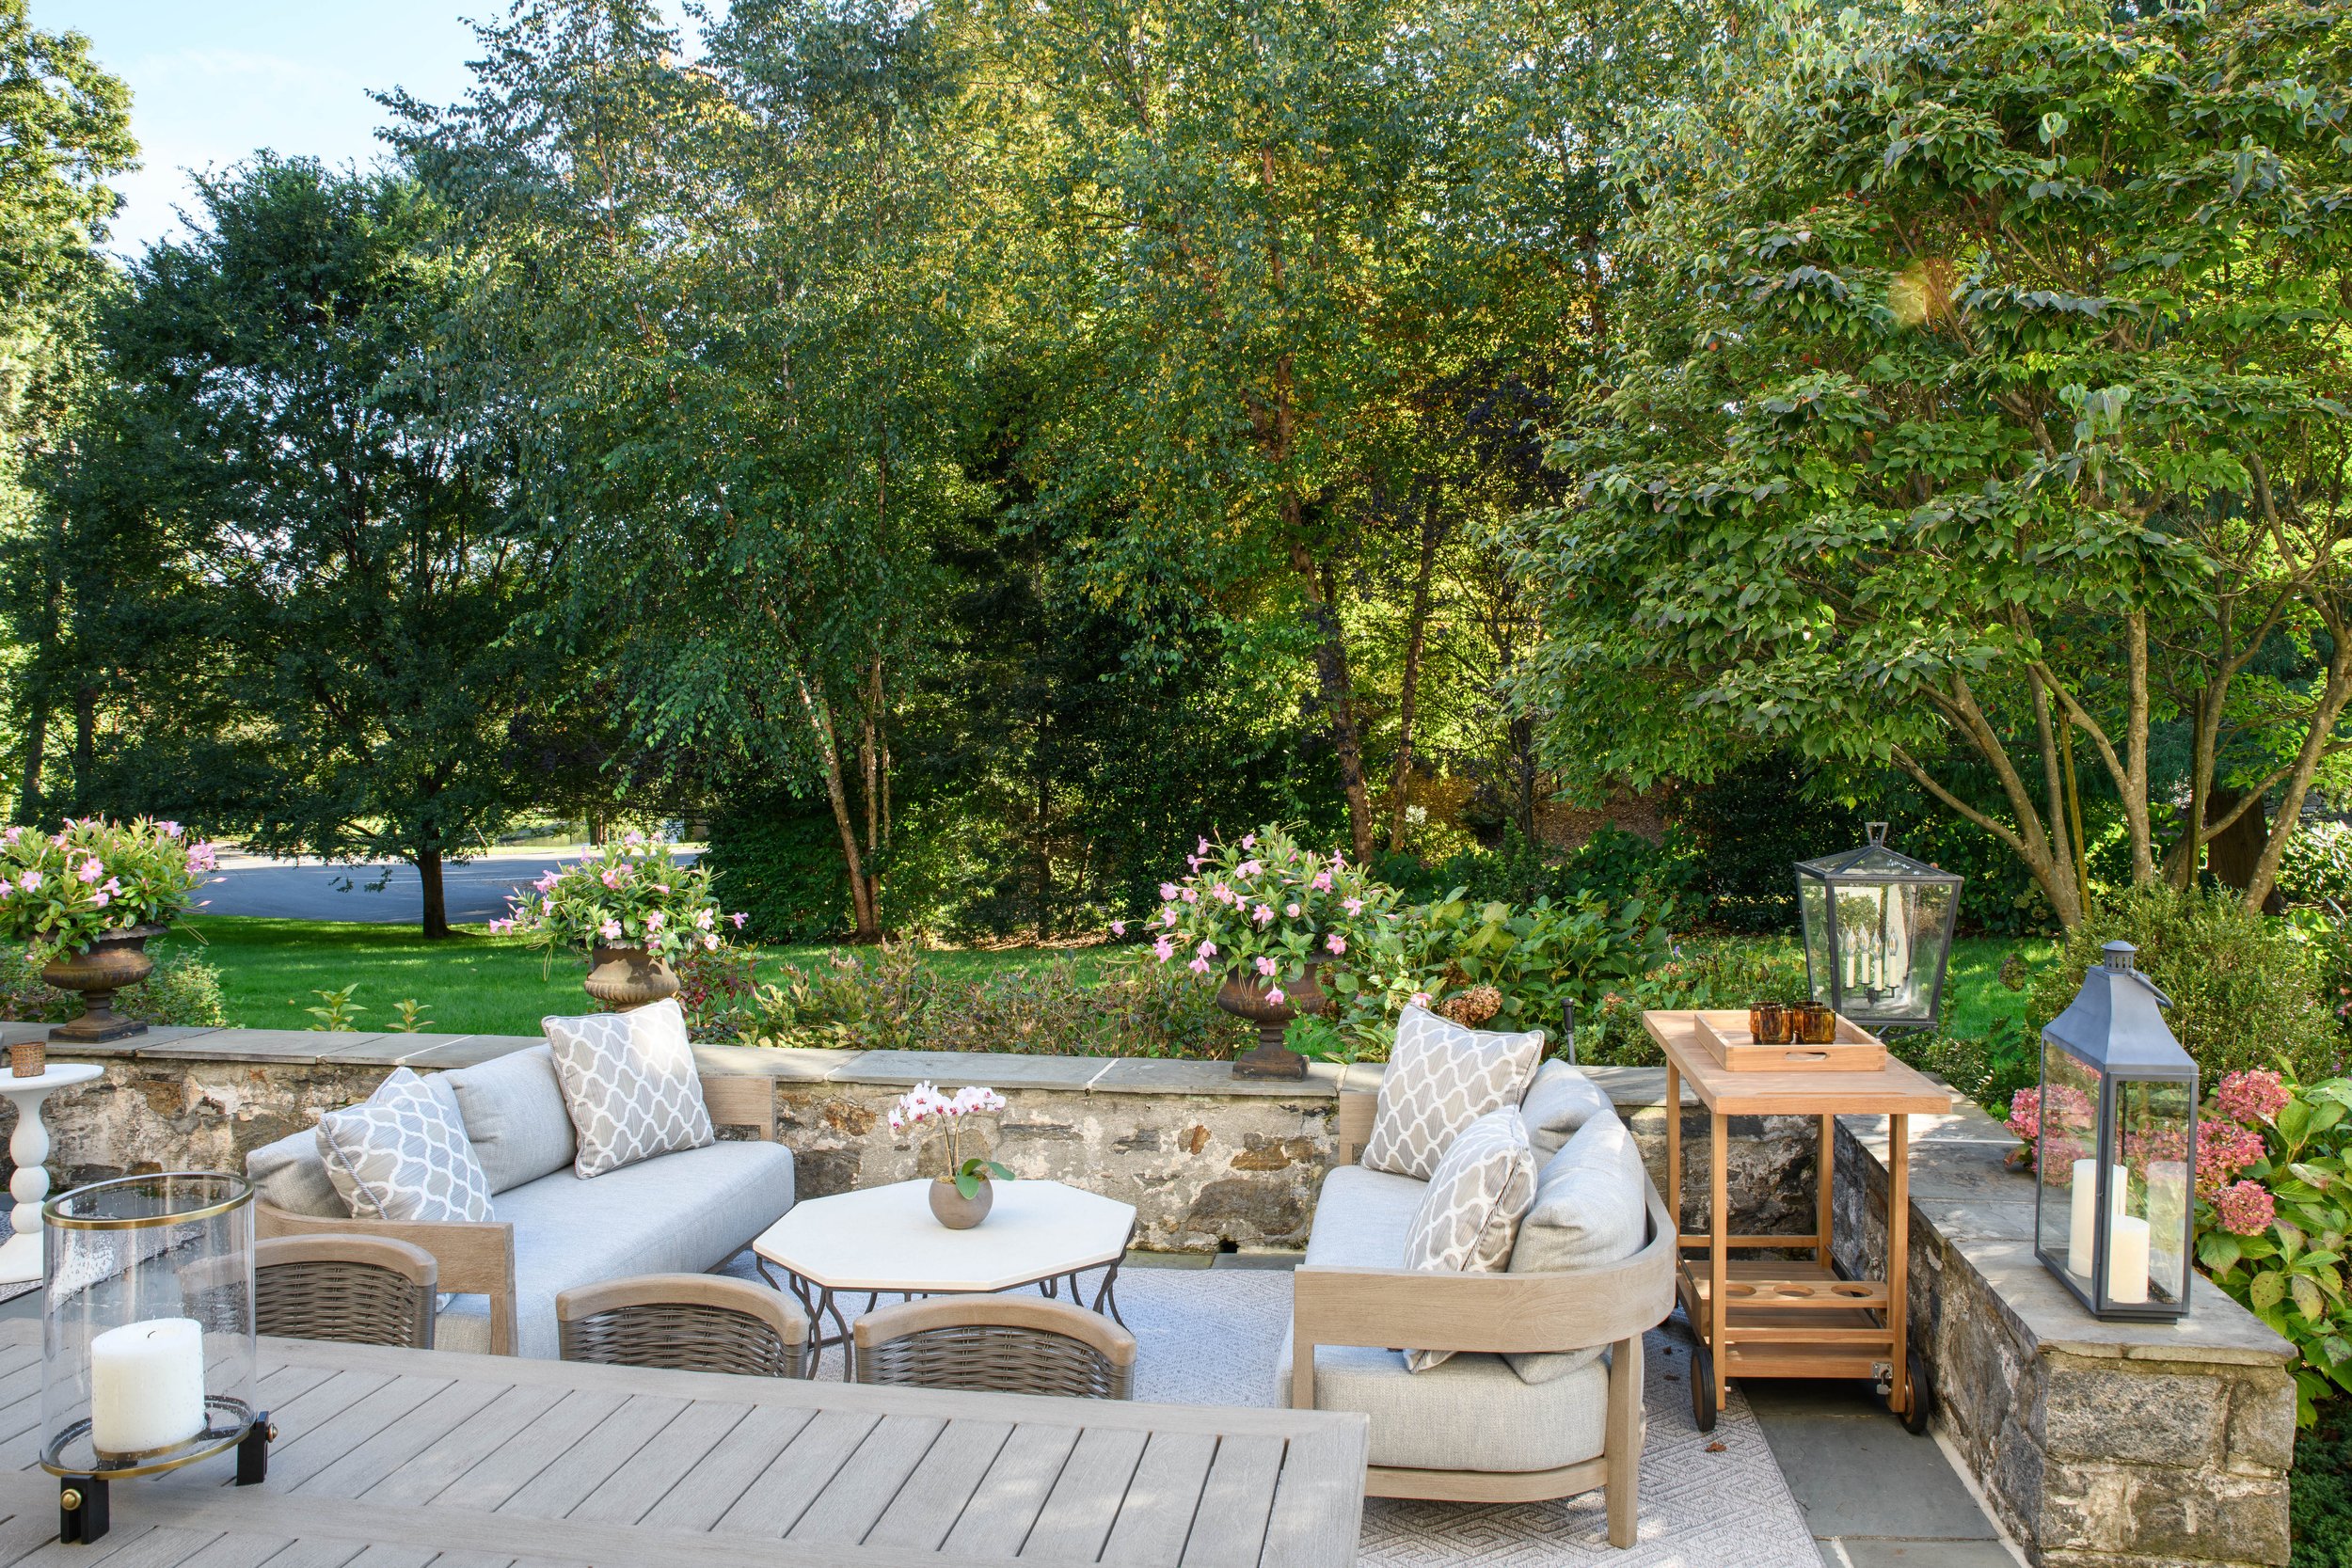 5-garden-patio-oasis-greenery-family-comfort-westechester-rinfret-interior-designs.jpg